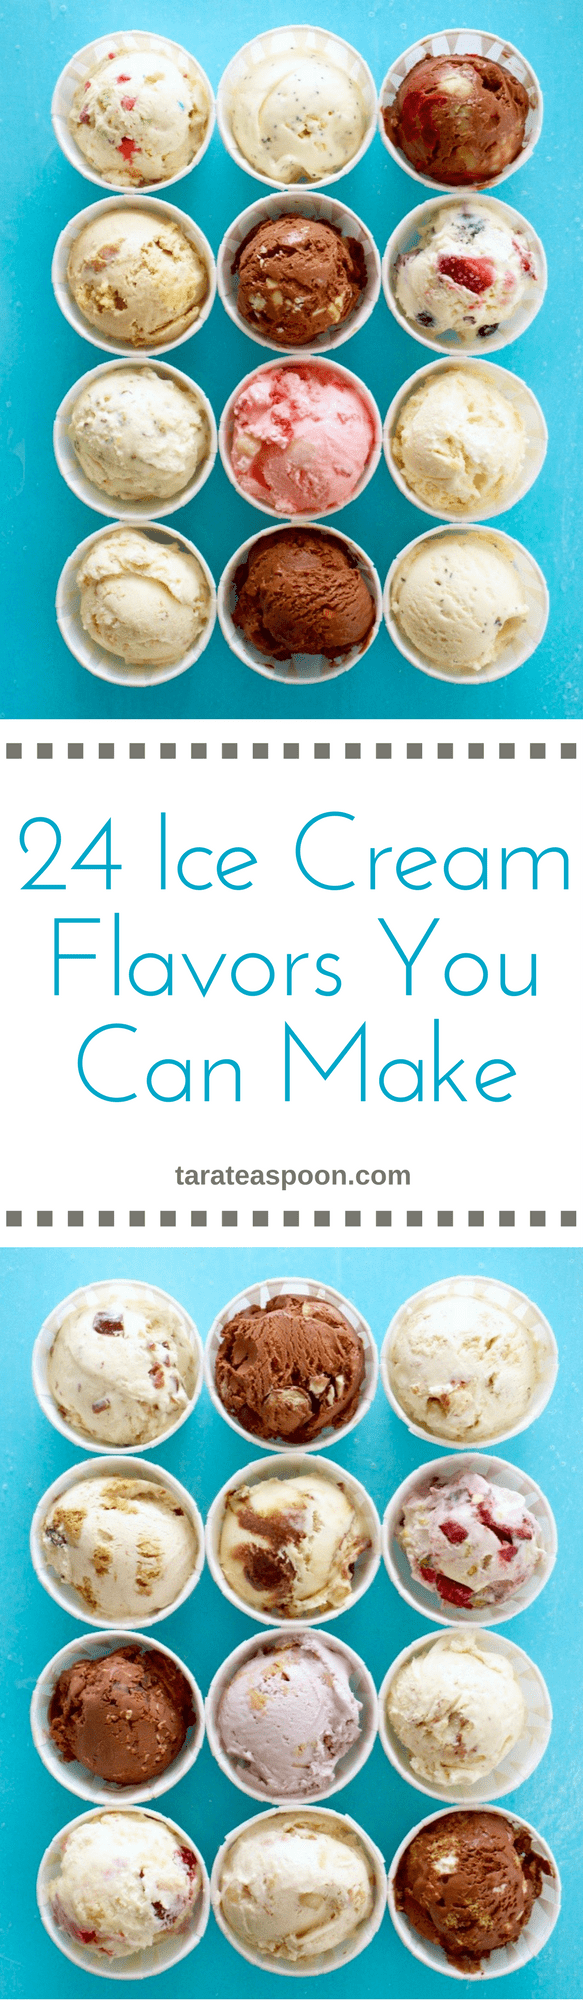 24 Unique & Different Ice Cream Flavors You Can Make | Tara Teaspoon Ice Cream Flavors Pictures